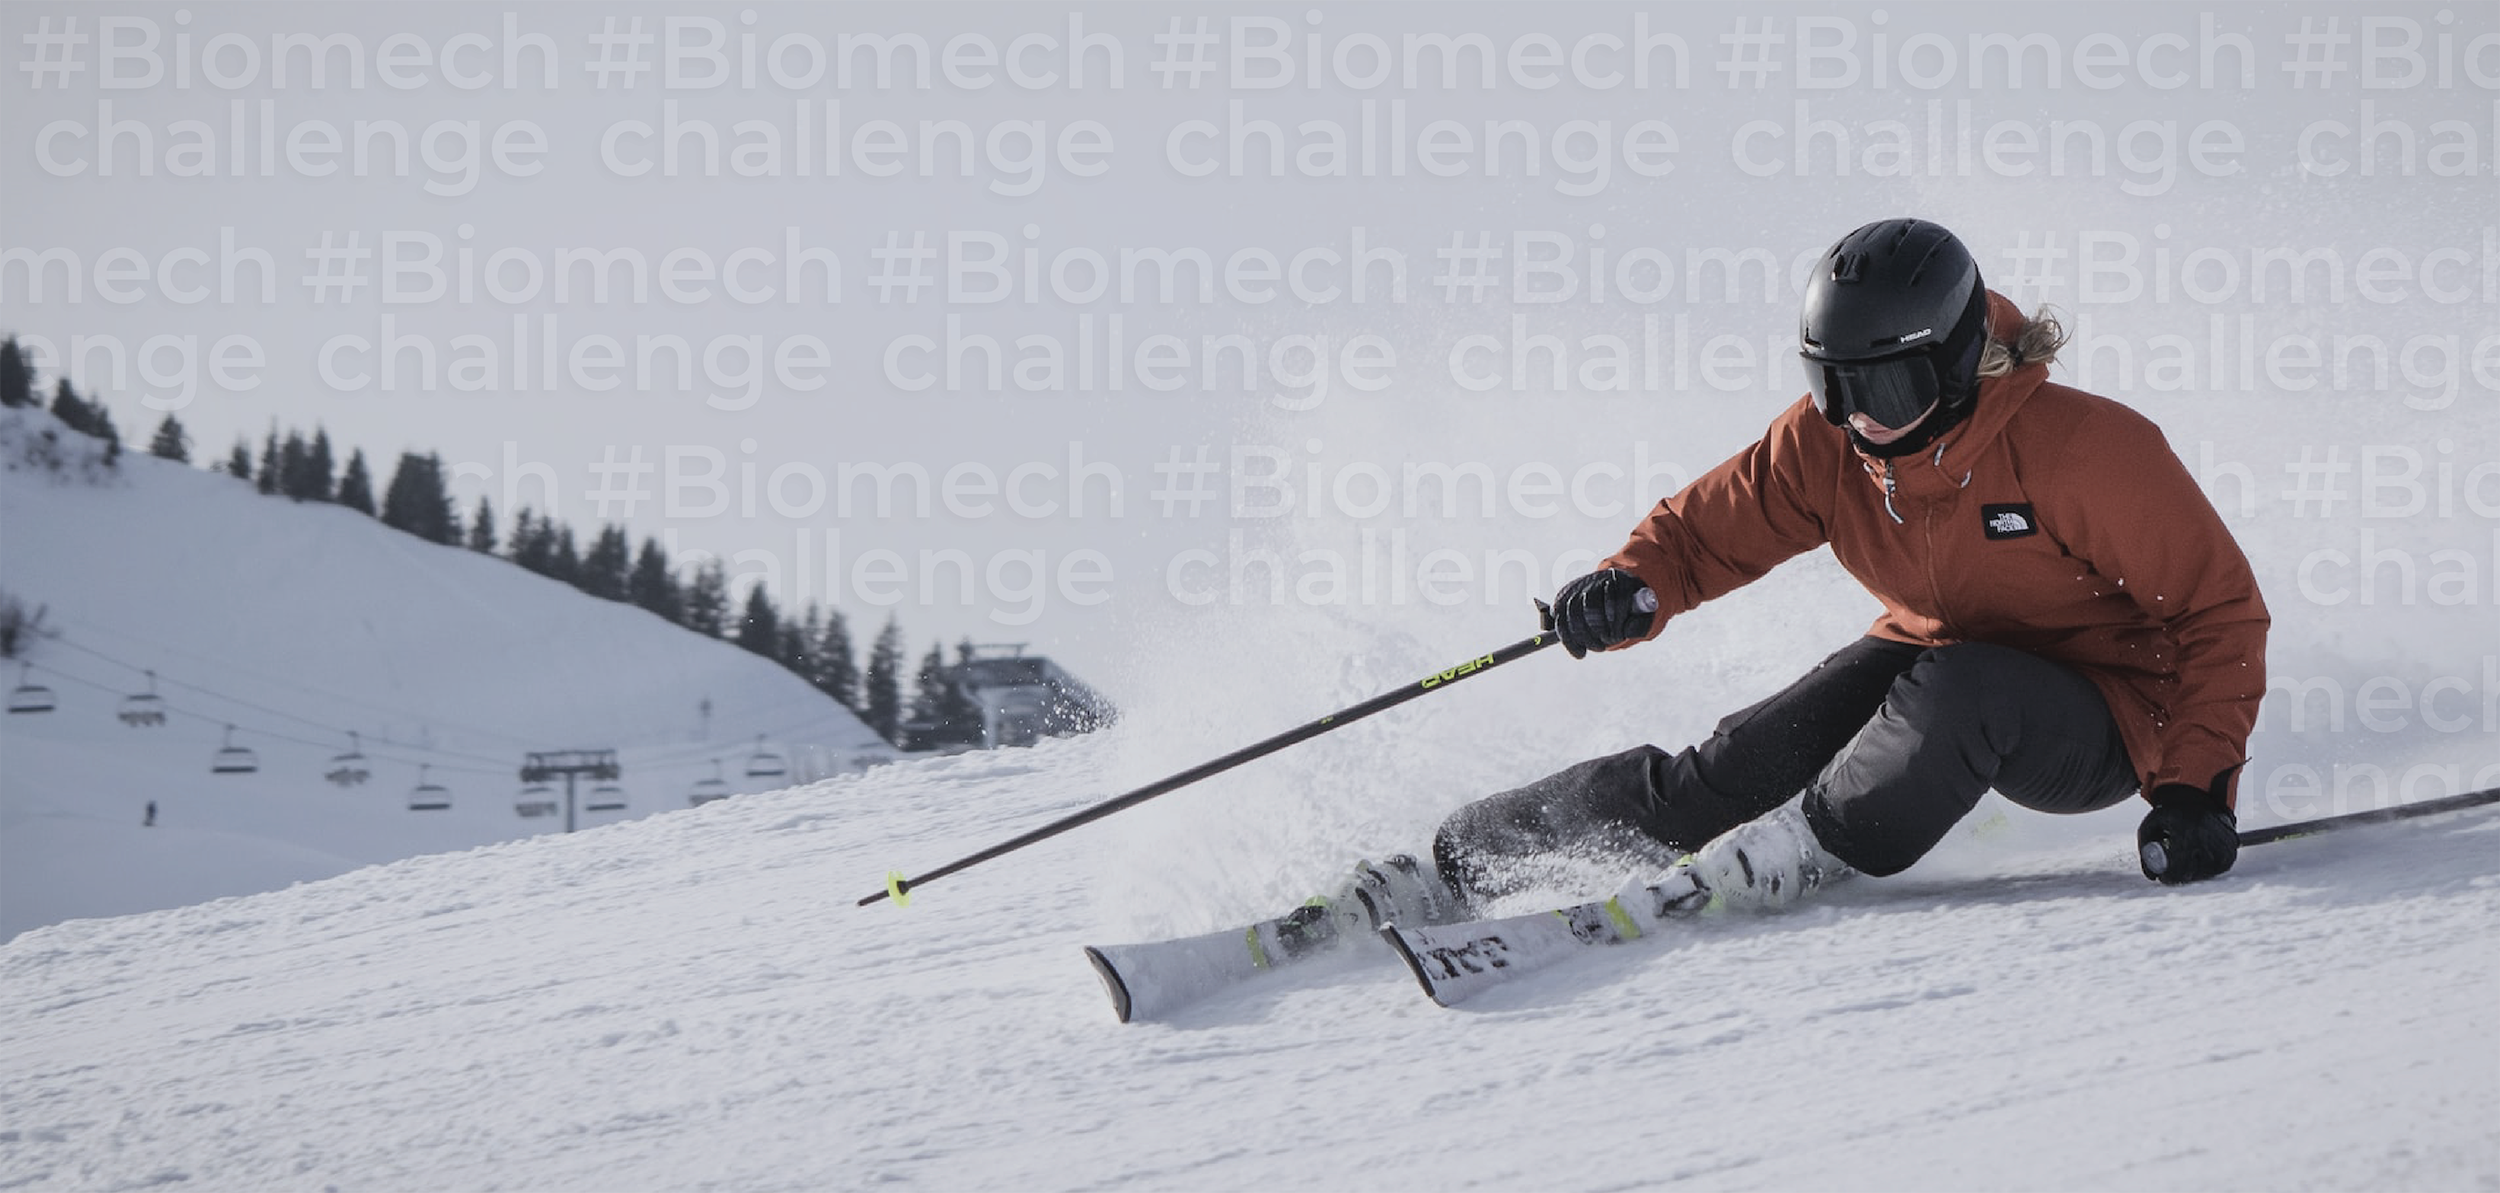 biomech-challenge23